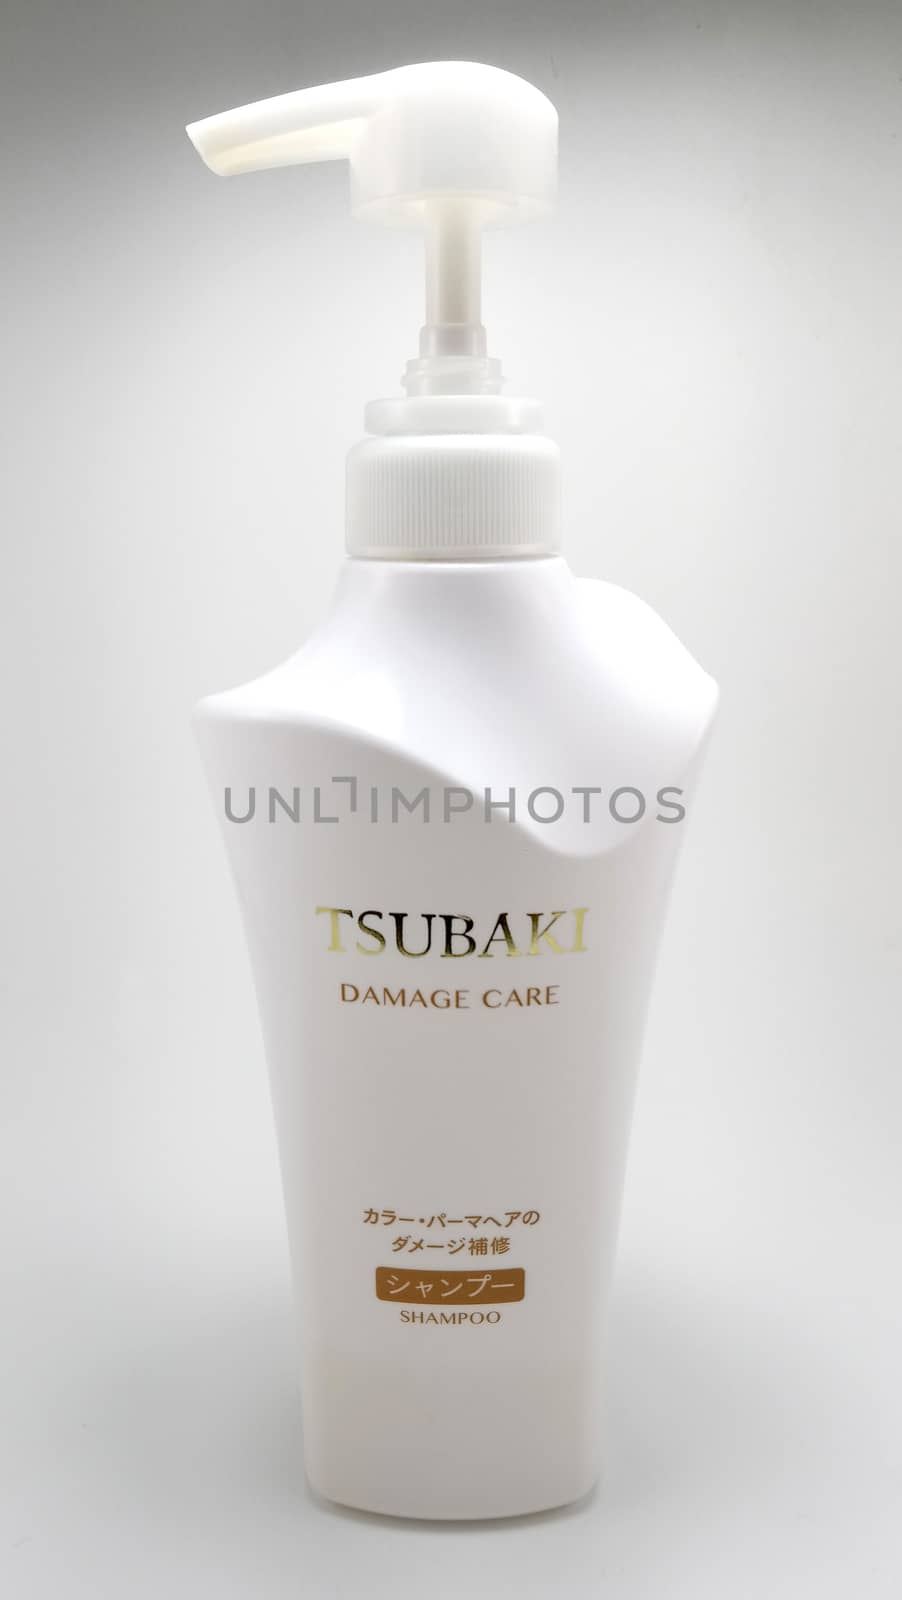 Tsubaki damage care shampoo bottle in Manila, Philippines by imwaltersy